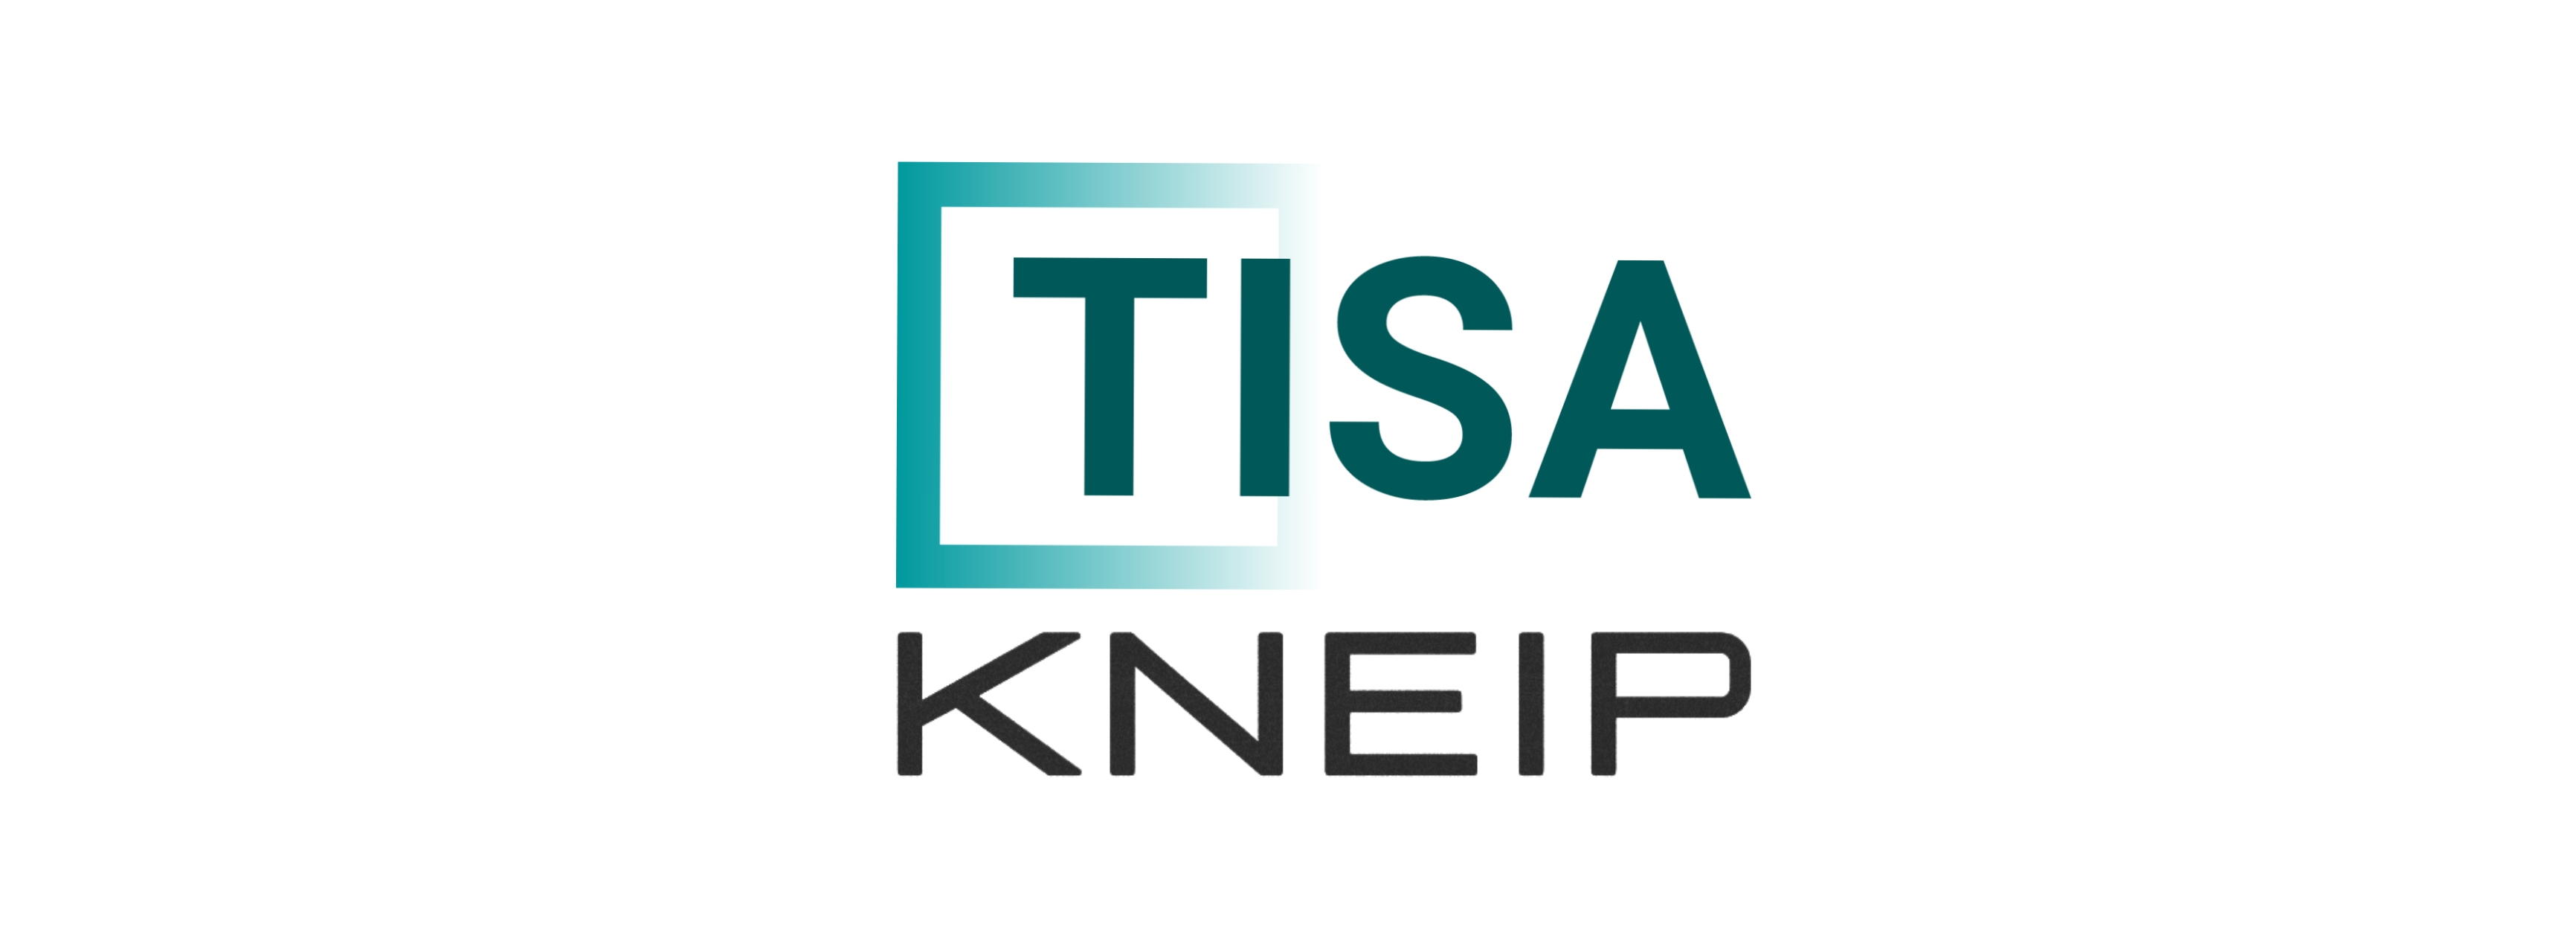 Kneip Named as TISA Universal Reporting Network (TURN) Solution Partner